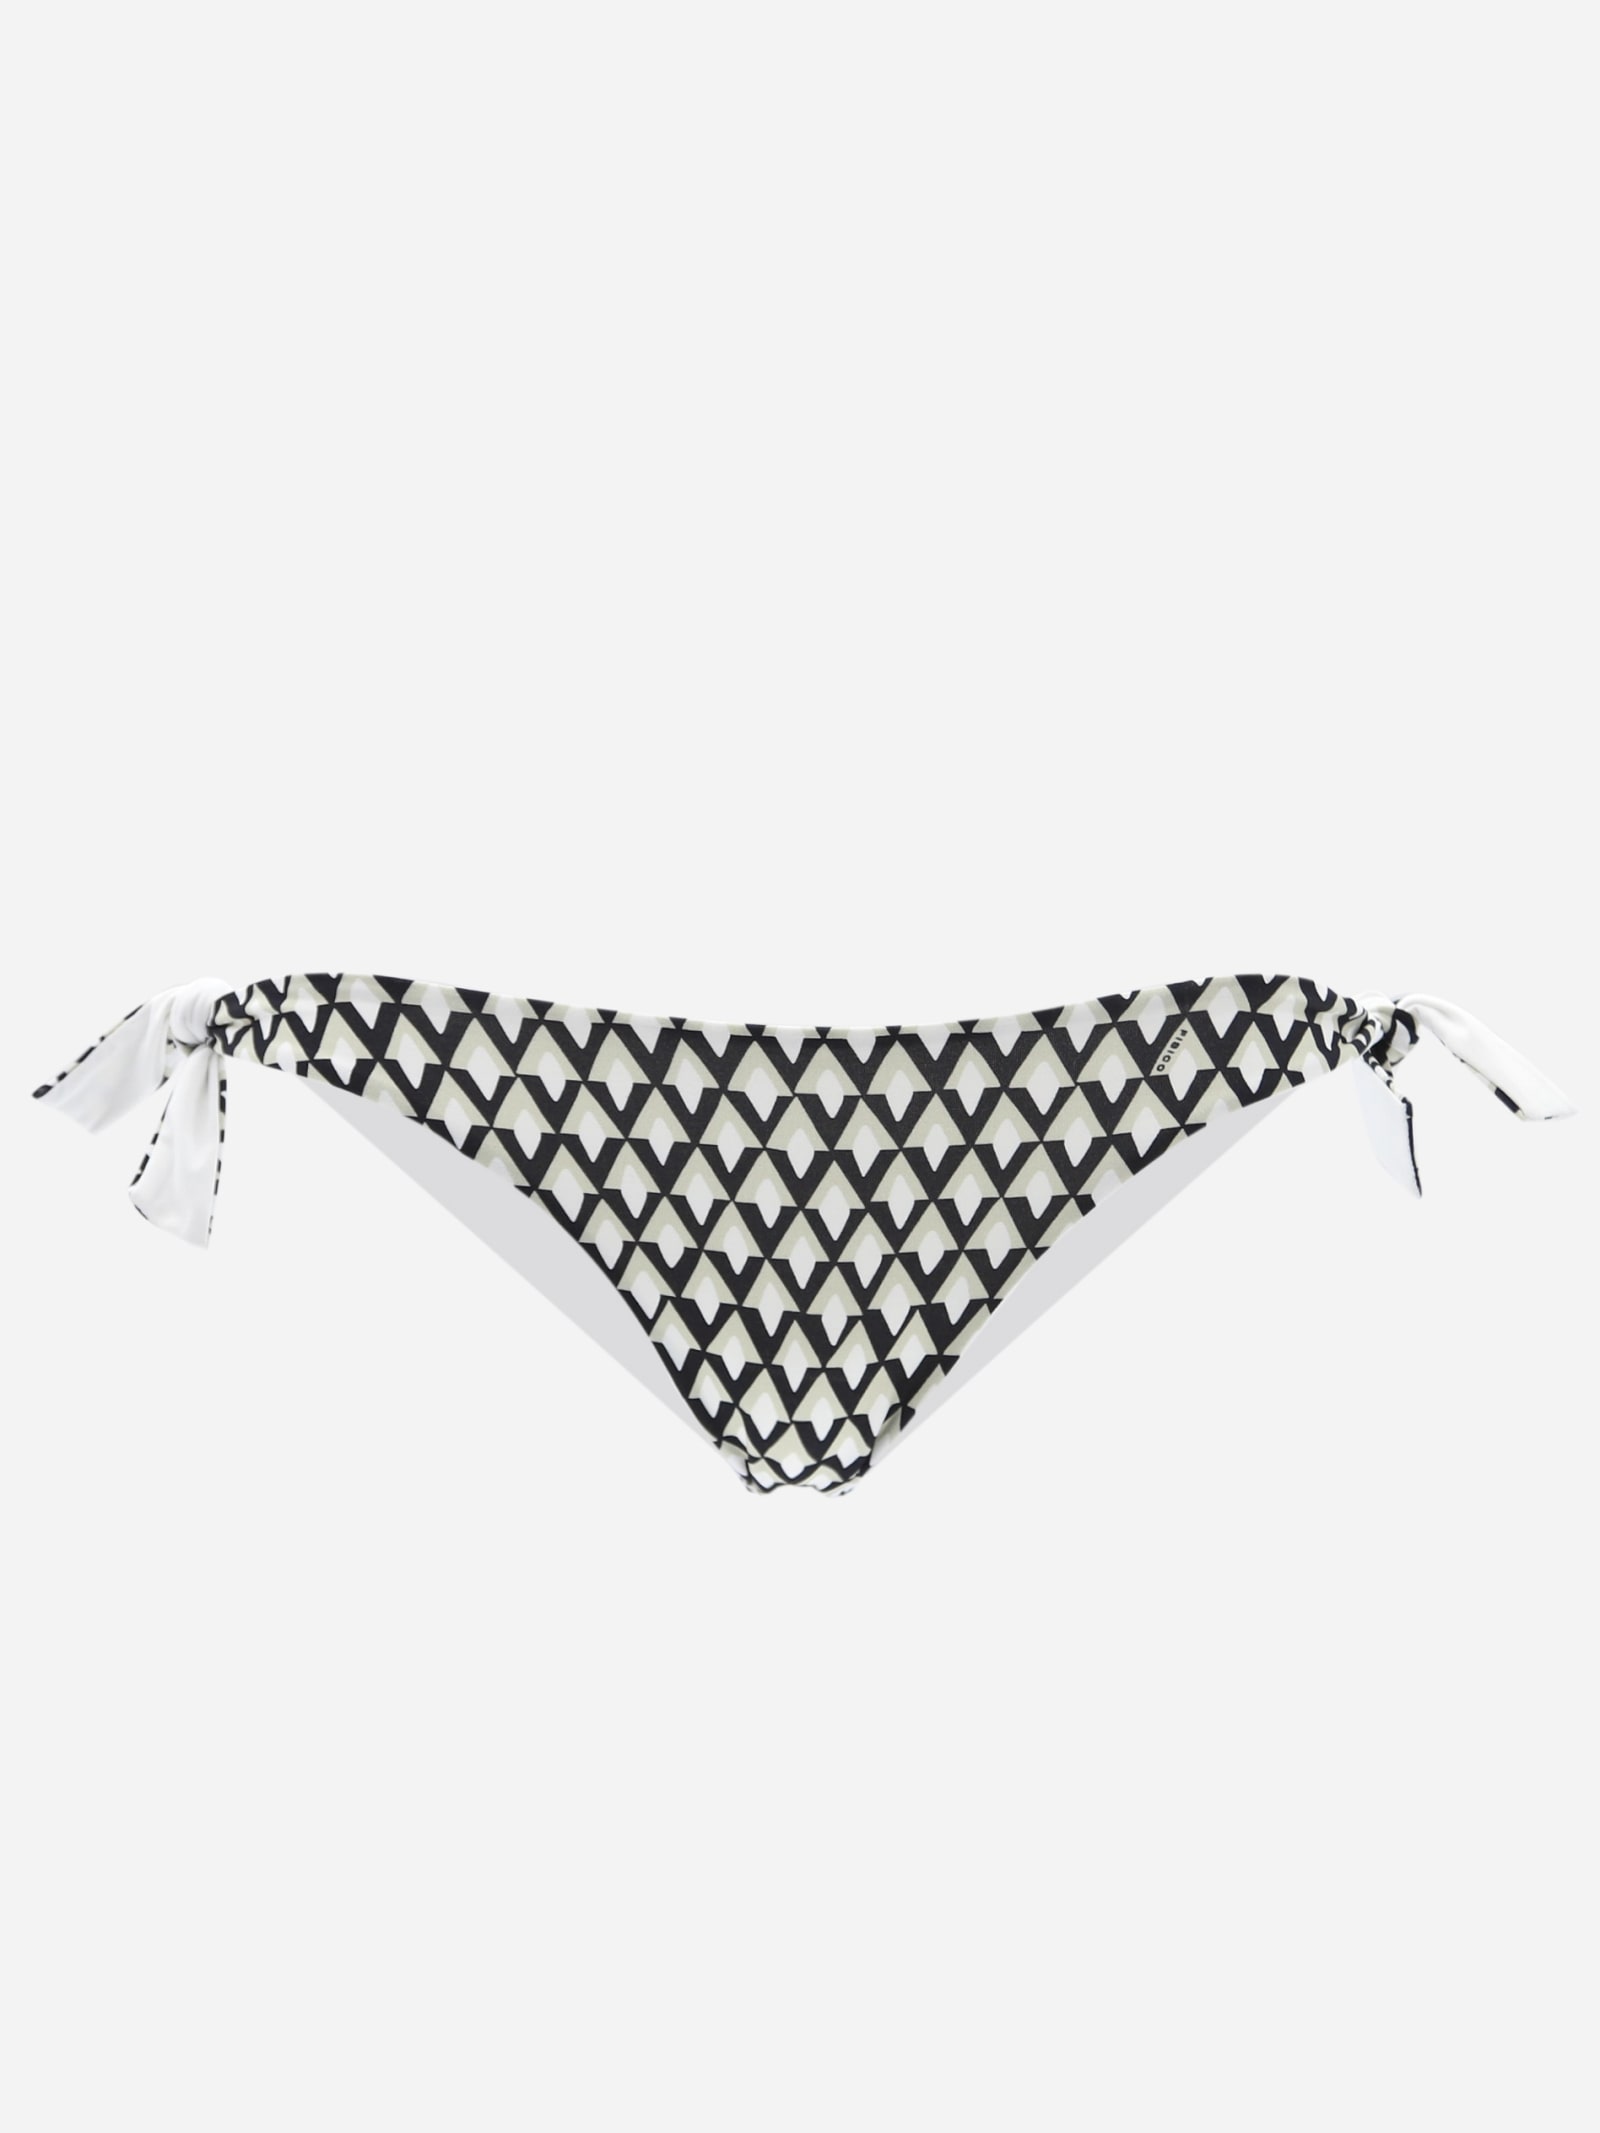 Fisico Cristina Ferrari Bikini Bottoms With Side Knot And Geometric Print In Black, White